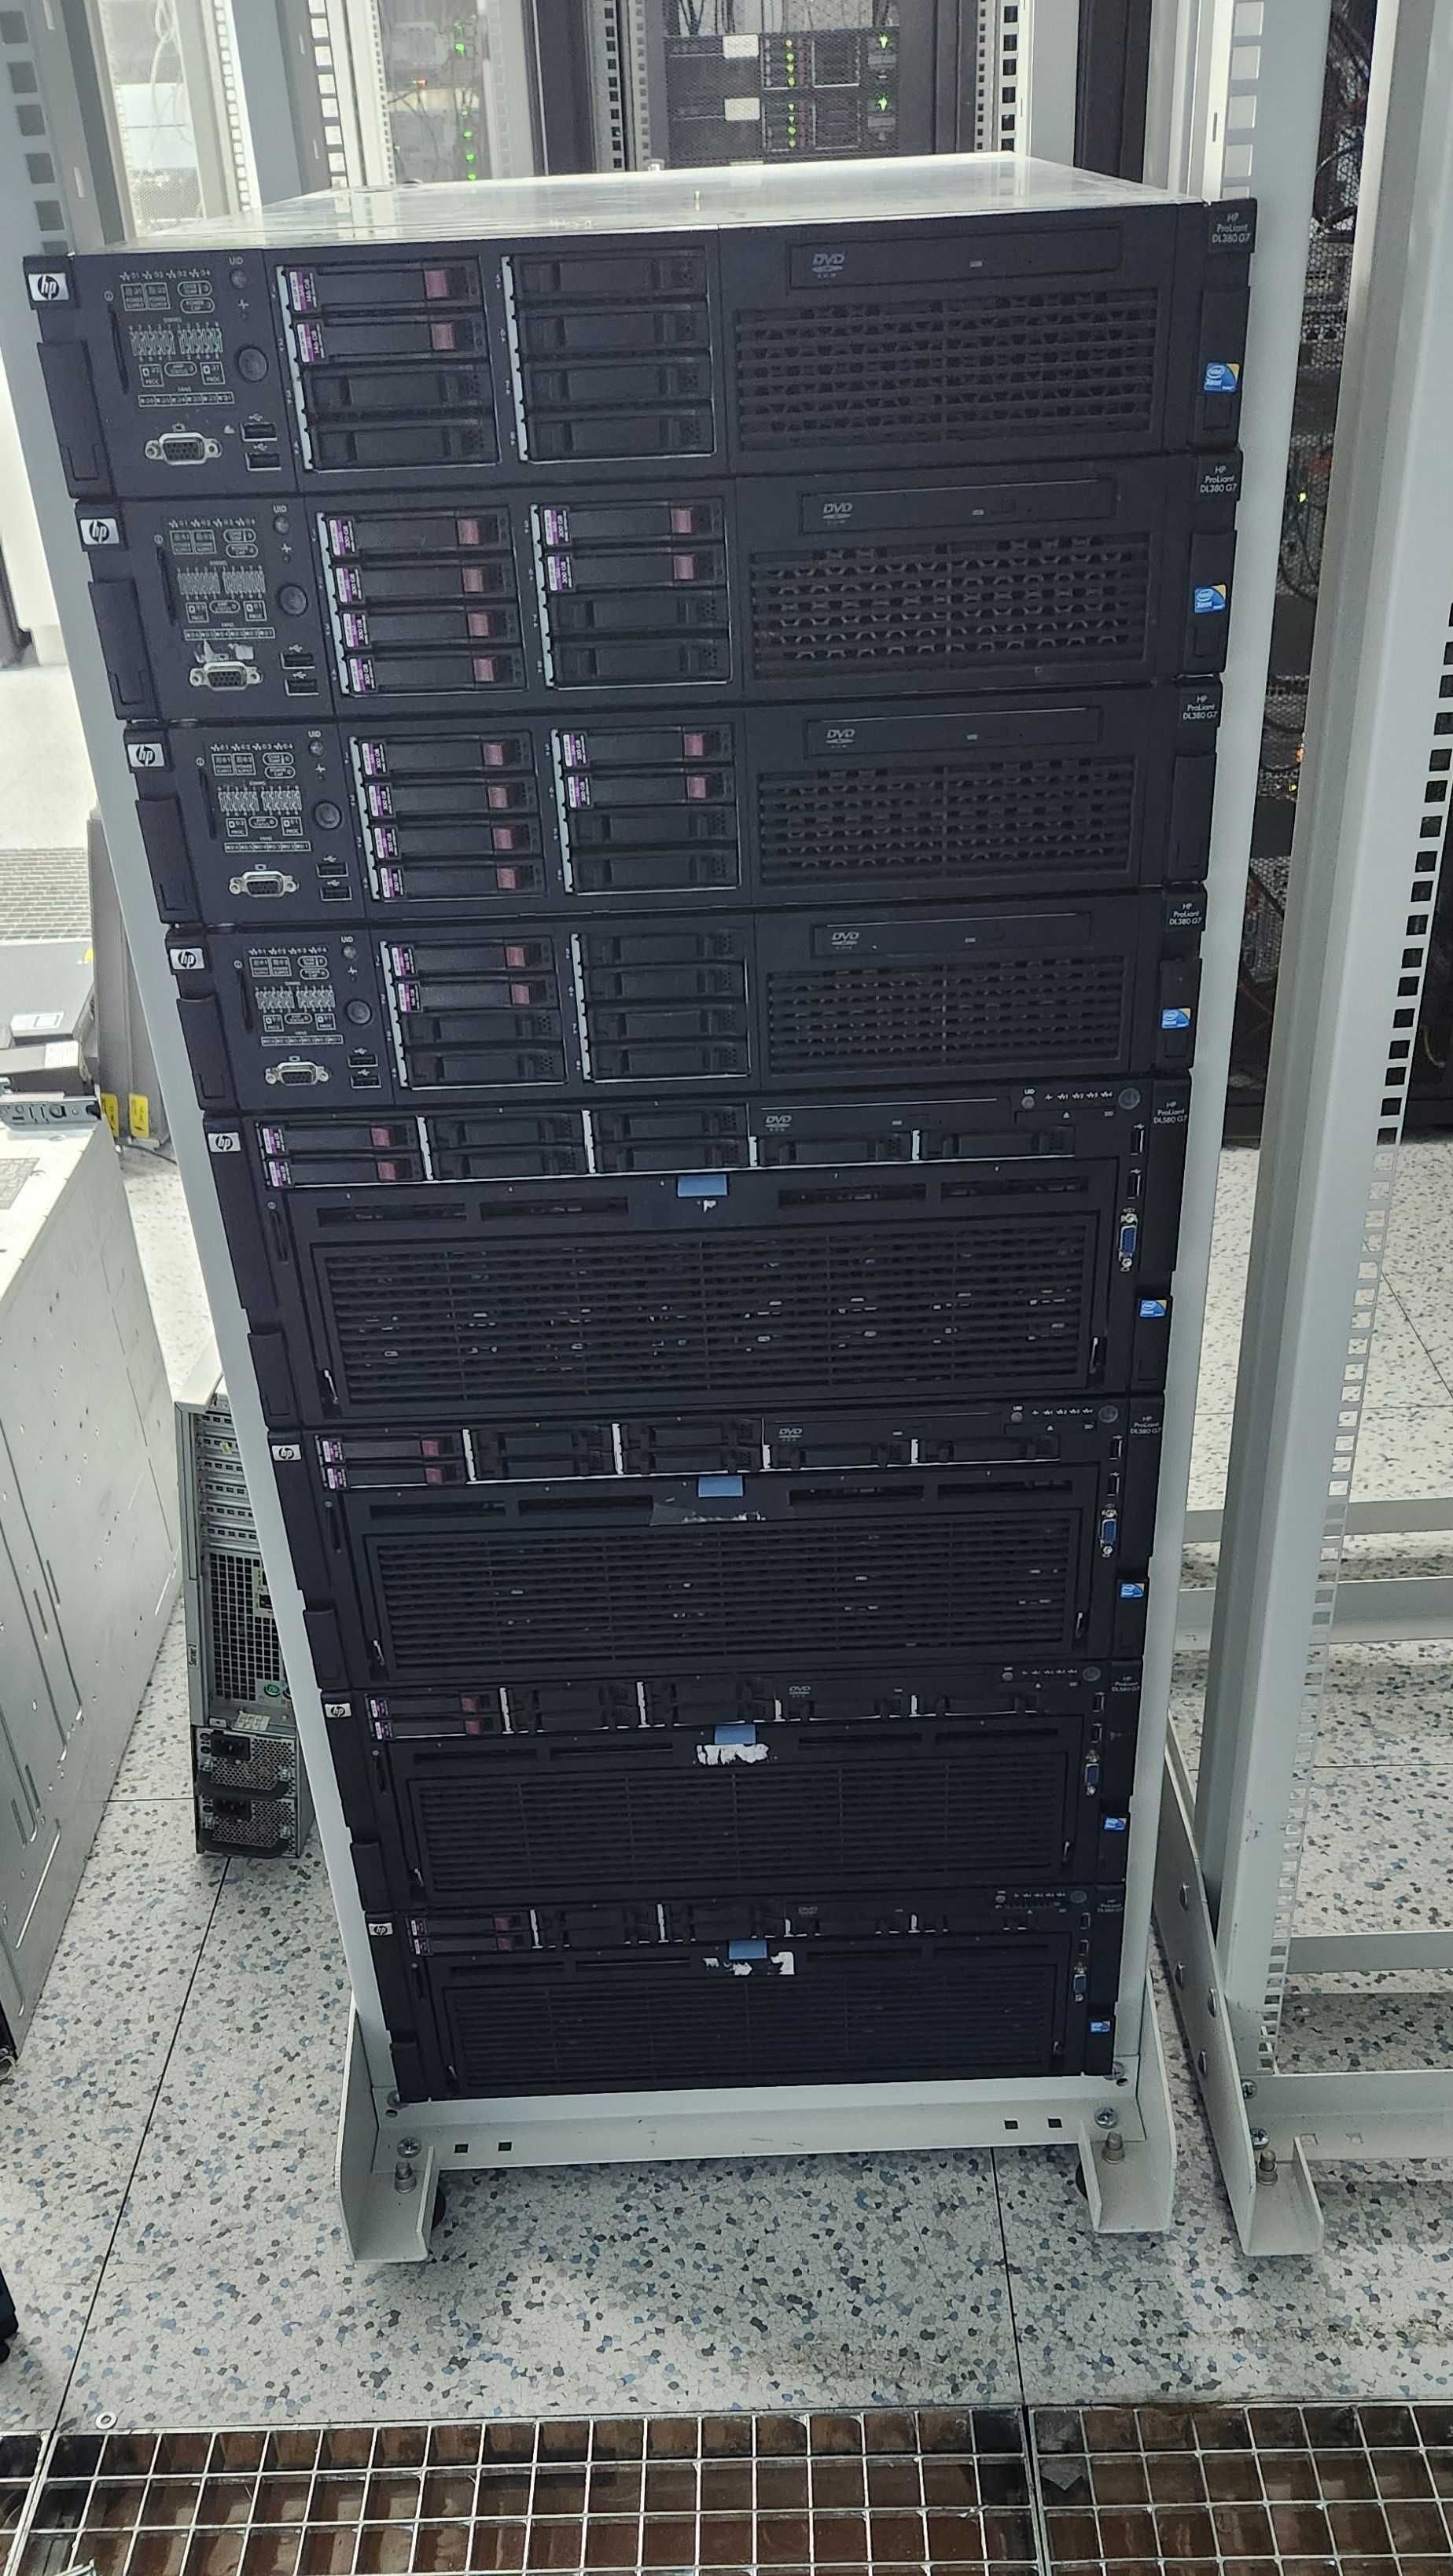 Ceрвер HP DL580 G7